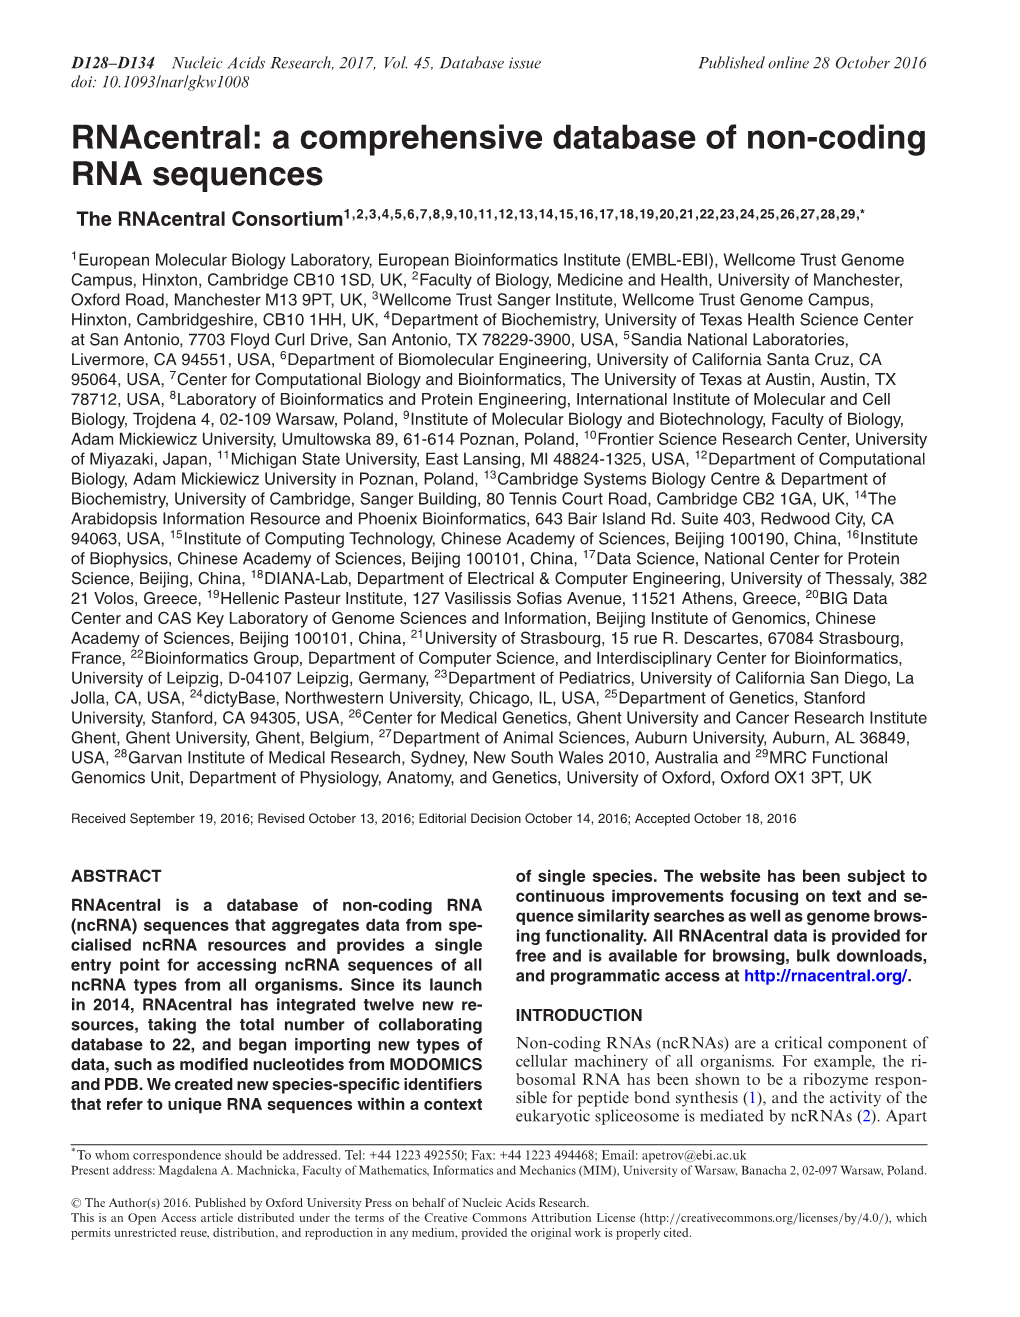 A Comprehensive Database of Non-Coding RNA Sequences the Rnacentral Consortium1,2,3,4,5,6,7,8,9,10,11,12,13,14,15,16,17,18,19,20,21,22,23,24,25,26,27,28,29,*